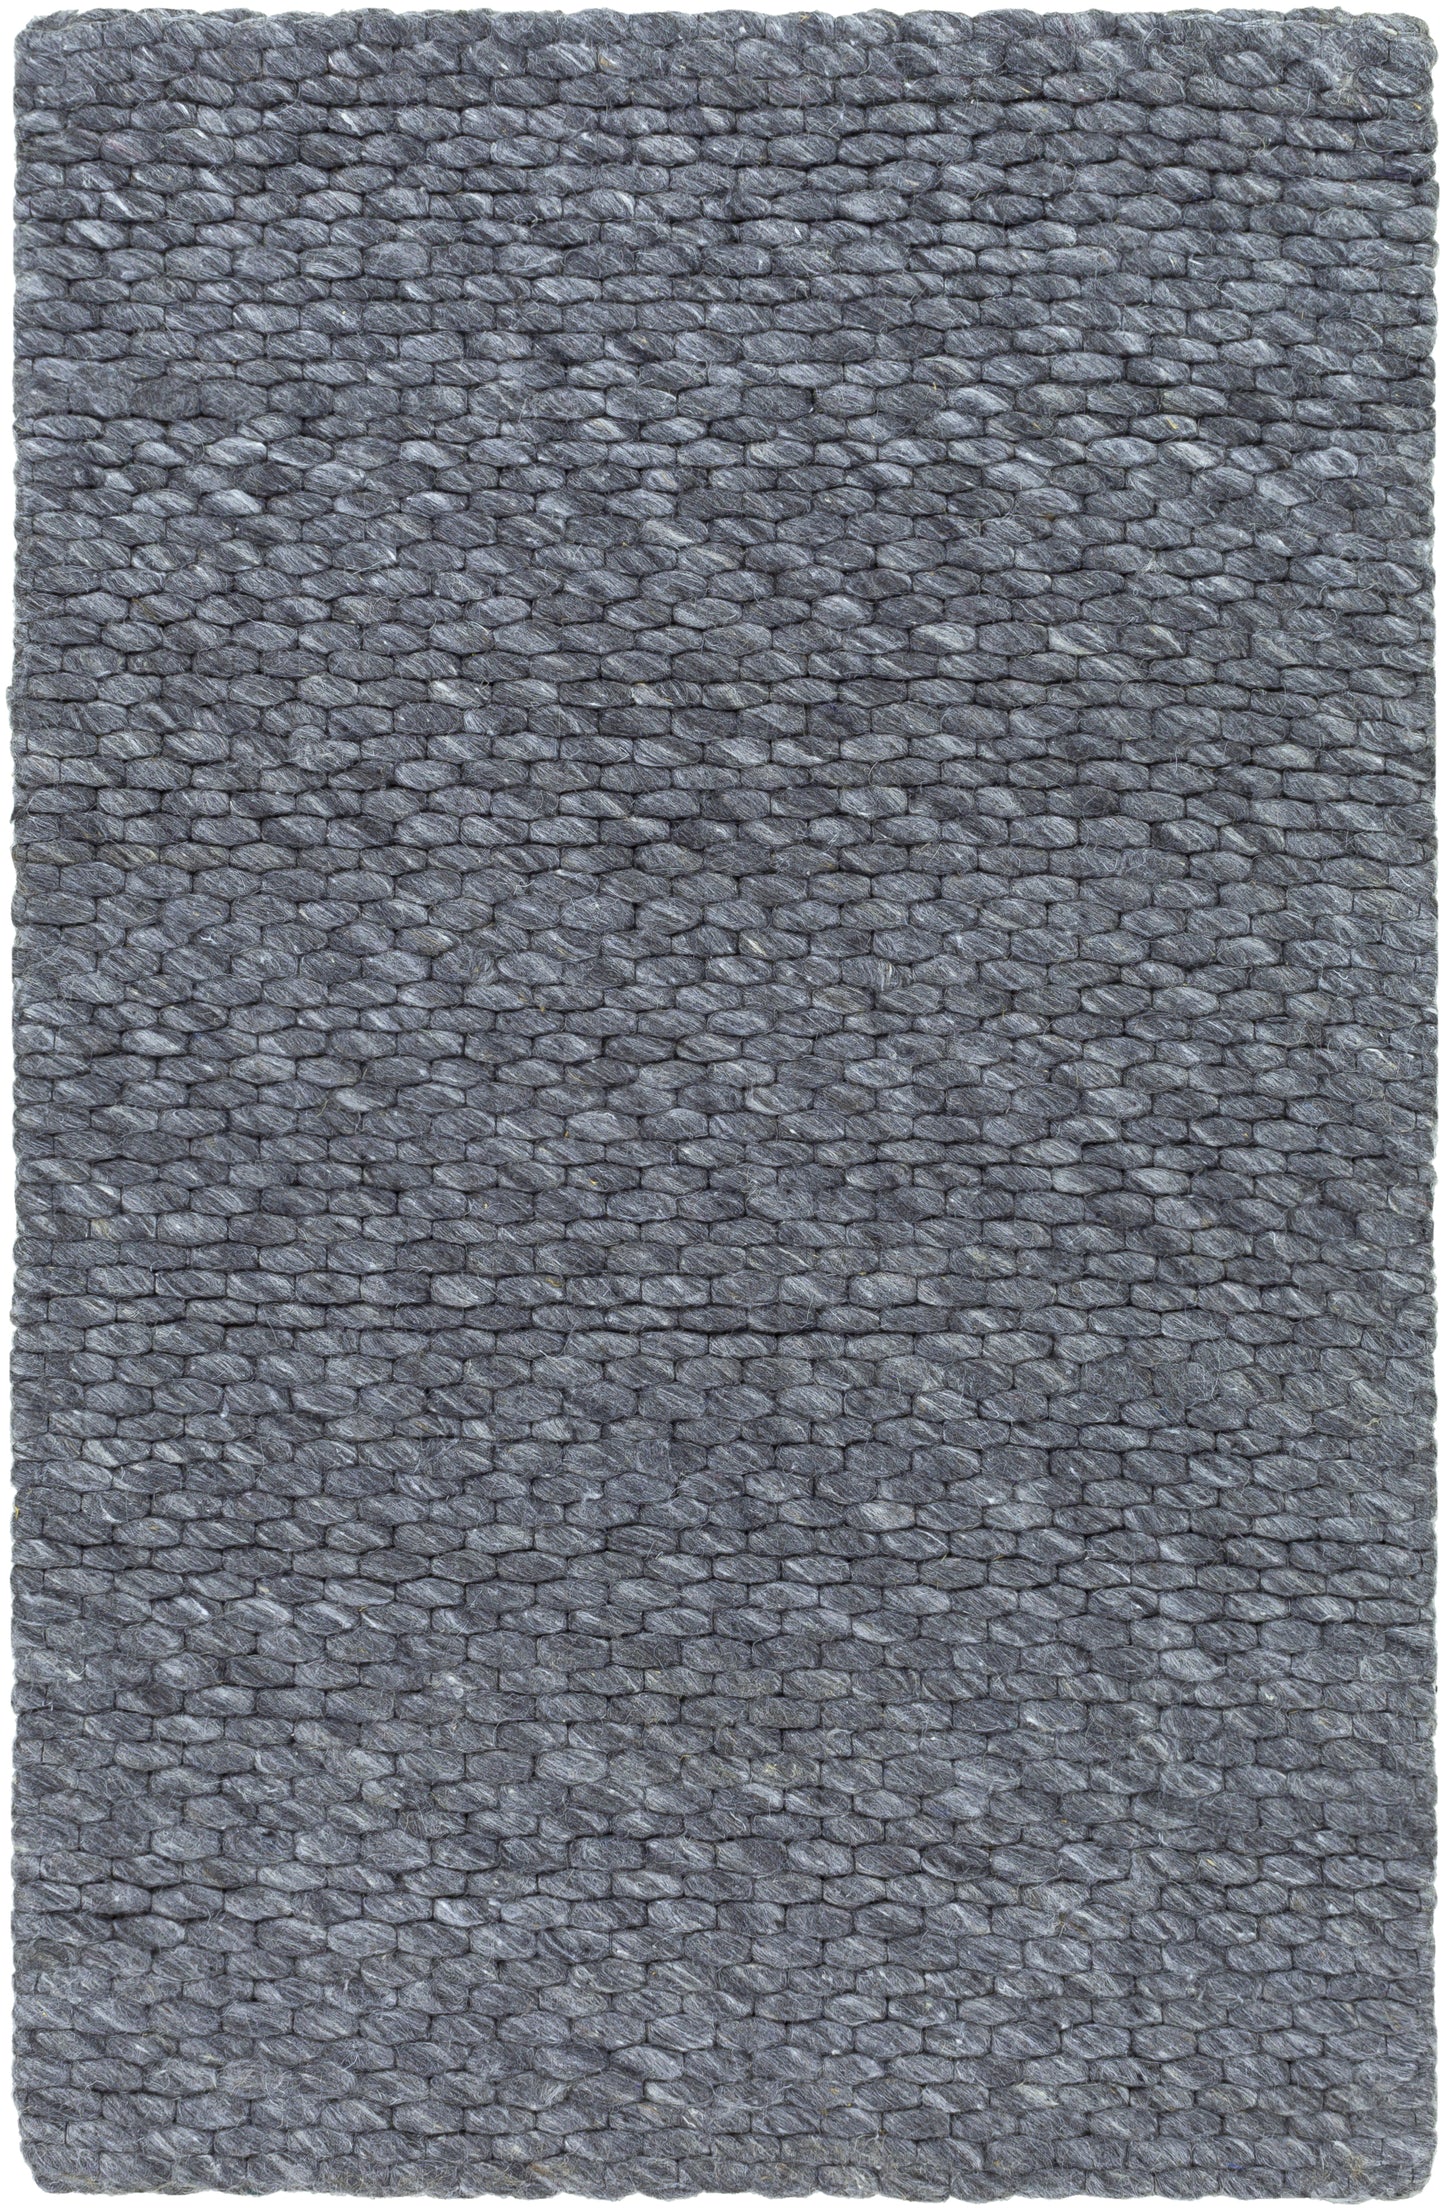 Colarado 25955 Hand Woven Wool Indoor Area Rug by Surya Rugs